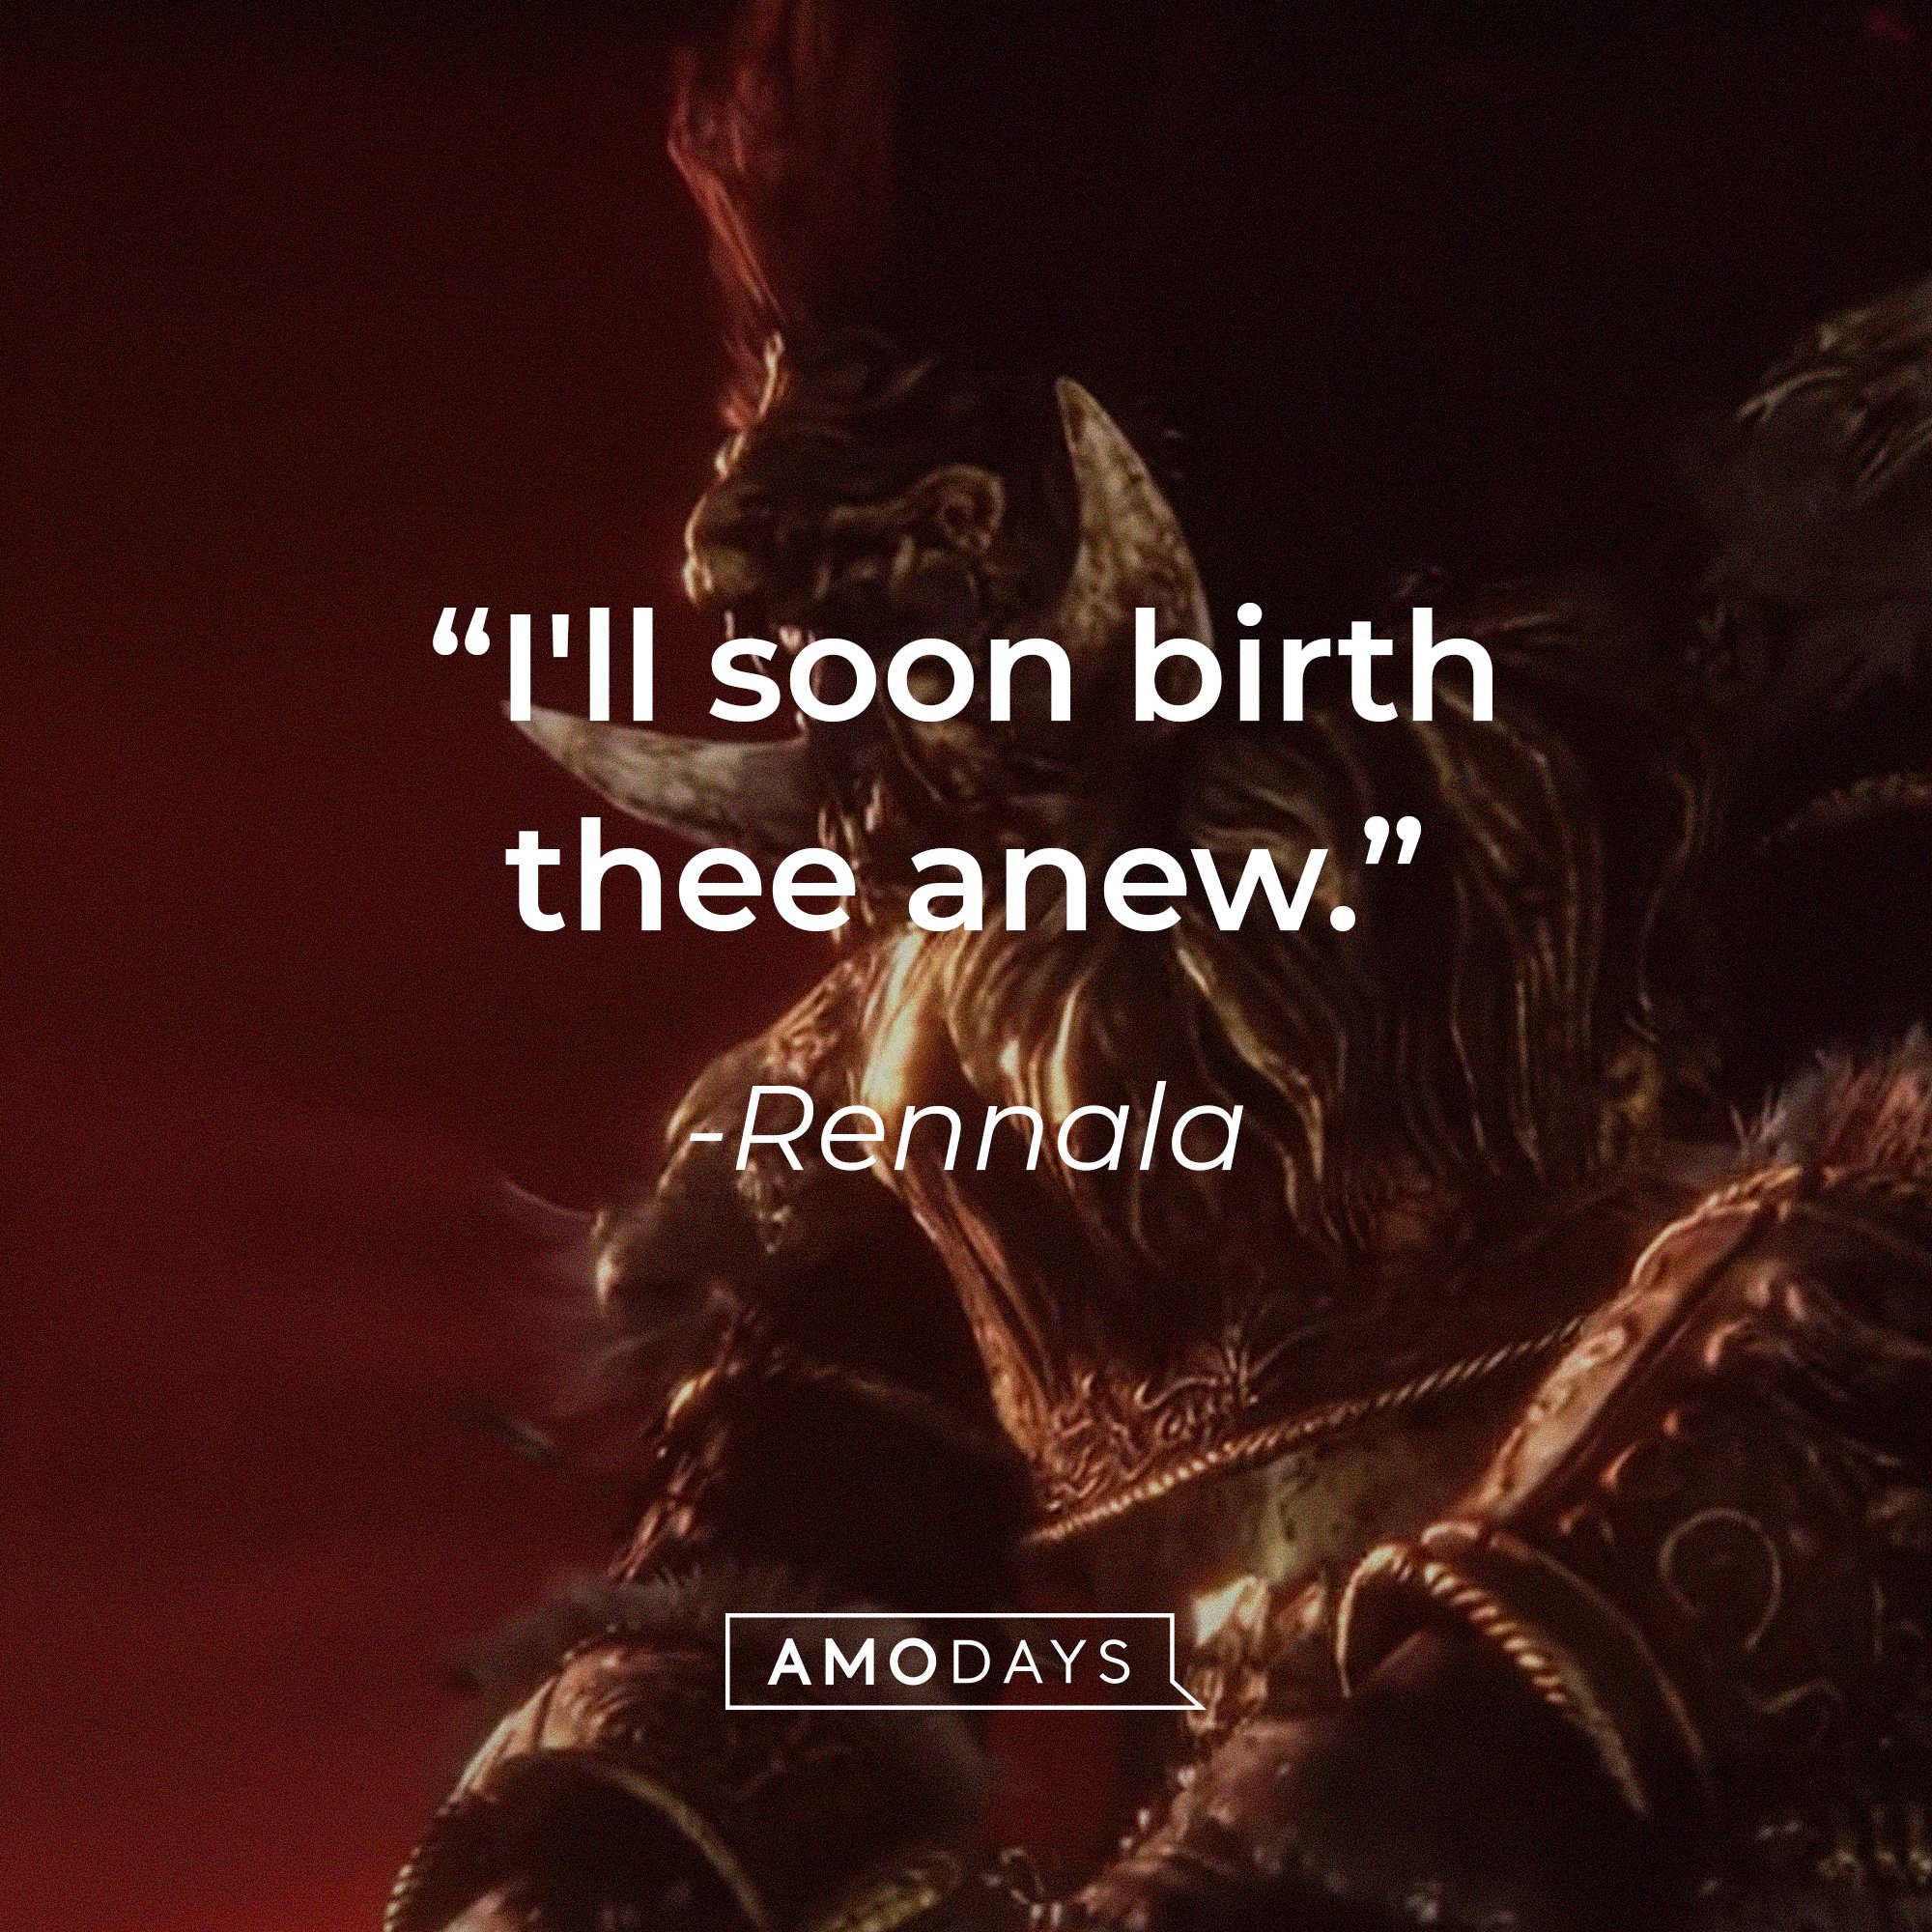 Rennala’s quote: "I'll soon birth thee anew." | Image: AmoDays